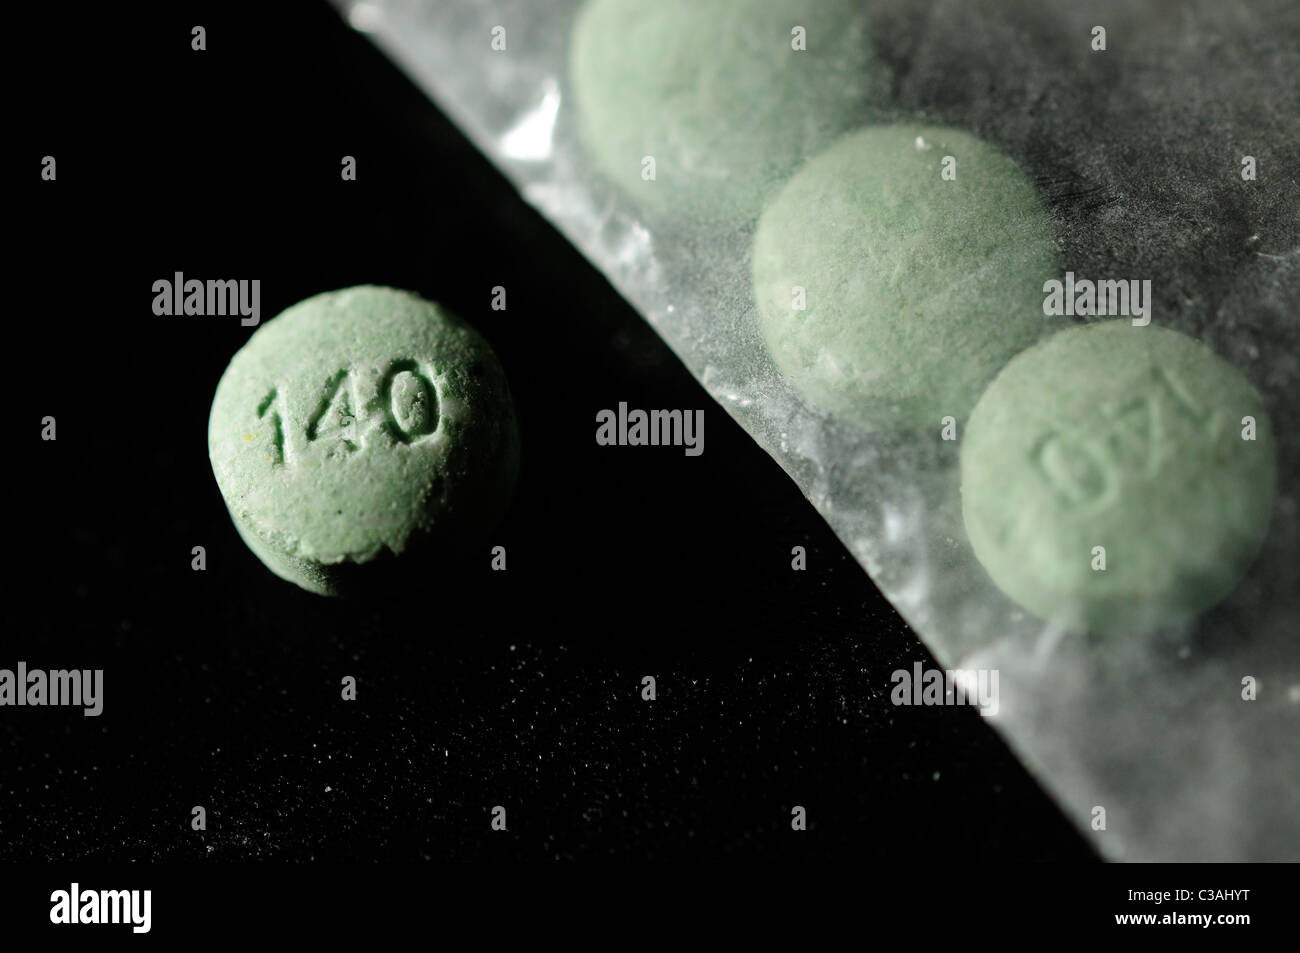 Closeup of 'ecstasy' tablets. Stock Photo